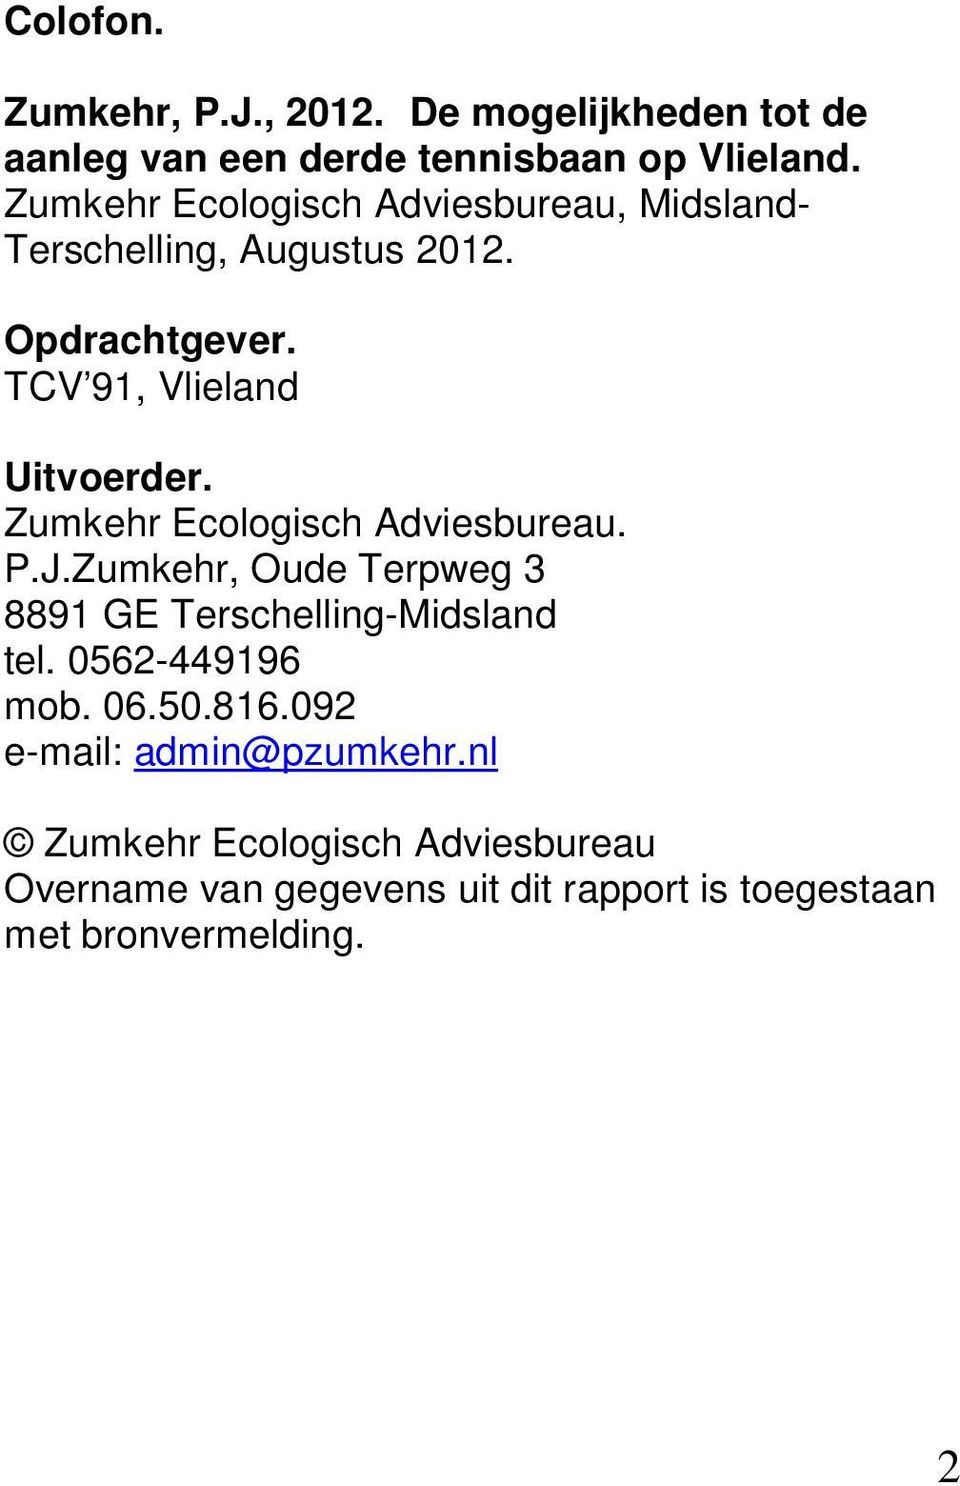 Zumkehr Ecologisch Adviesbureau. P.J.Zumkehr, Oude Terpweg 3 8891 GE Terschelling-Midsland tel. 0562-449196 mob. 06.50.